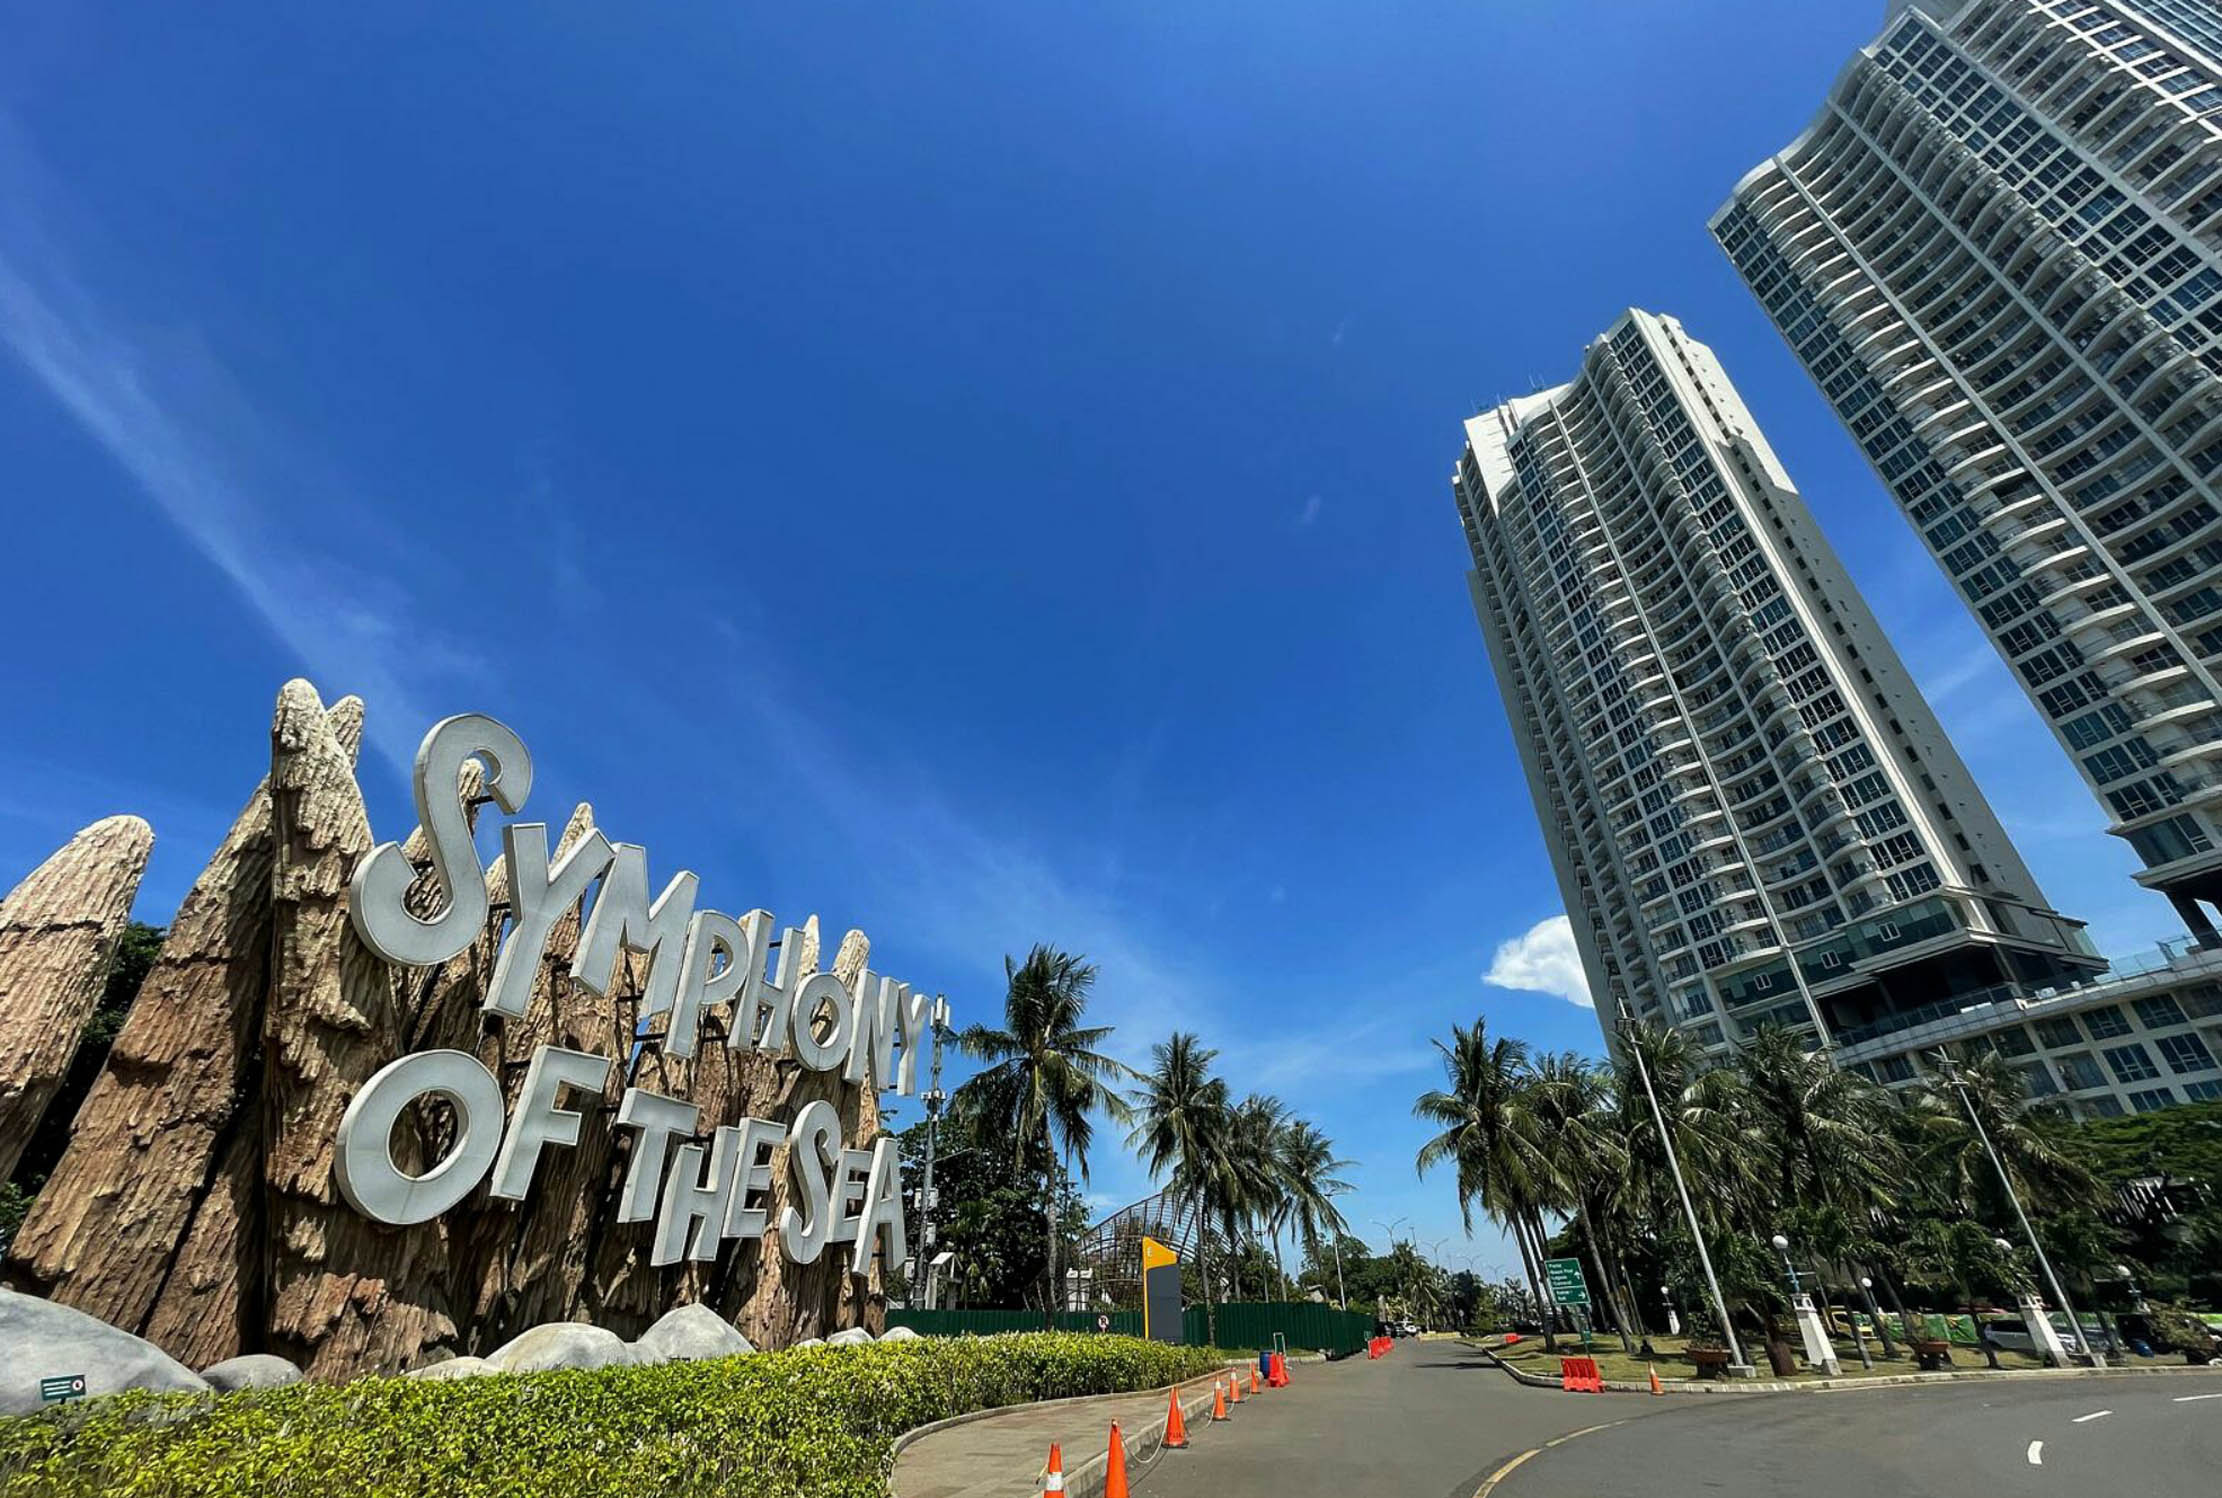 Kawasan Taman Impian Jaya Ancol resmi ditunjuk sebagai venue penyelenggaraan balap Formula E yang digelar bulan Juni 2022 mendatang. Foto : Panji Asmoro/TrenAsia